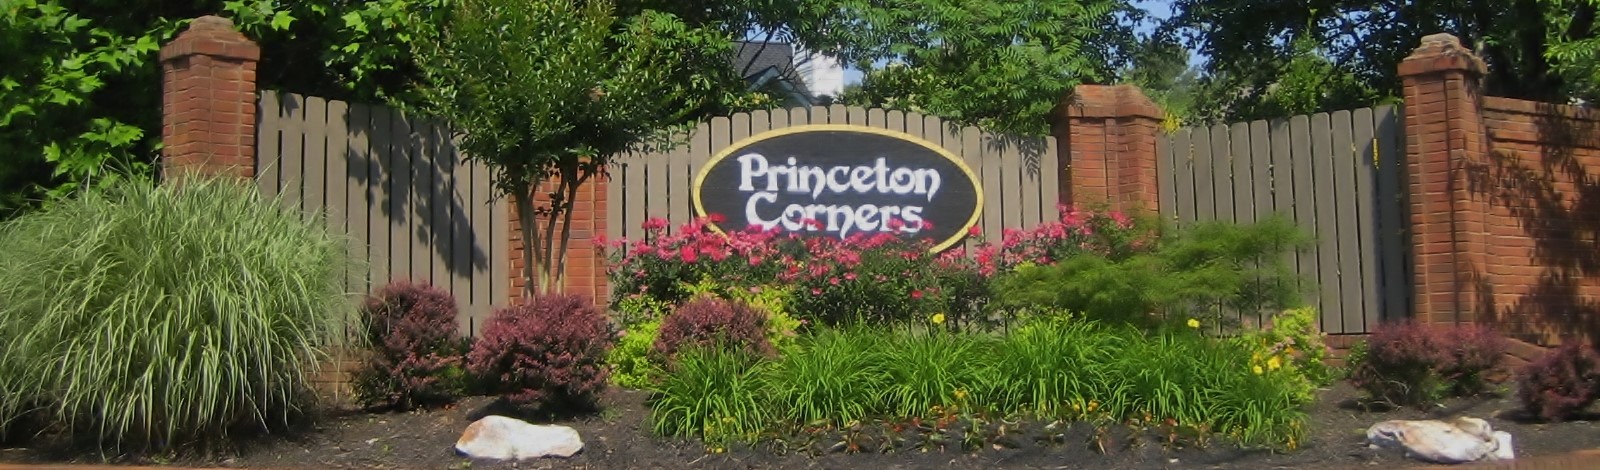 Princeton Corners